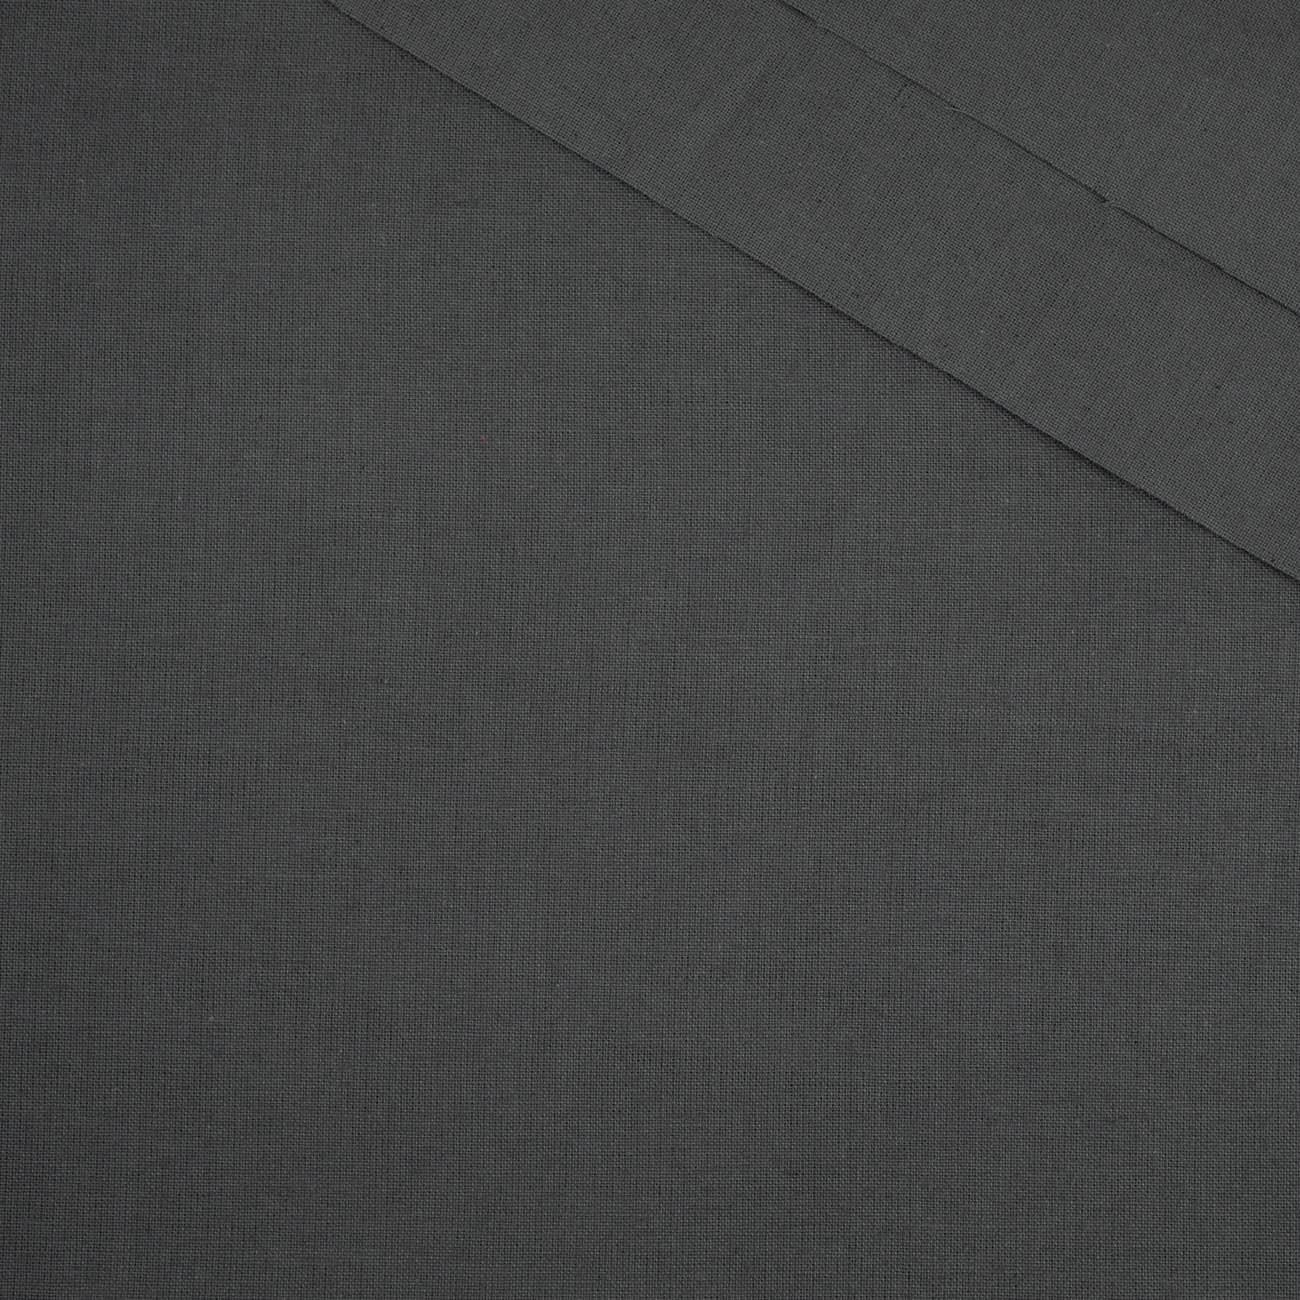 STEEL GRAY - Cotton woven fabric